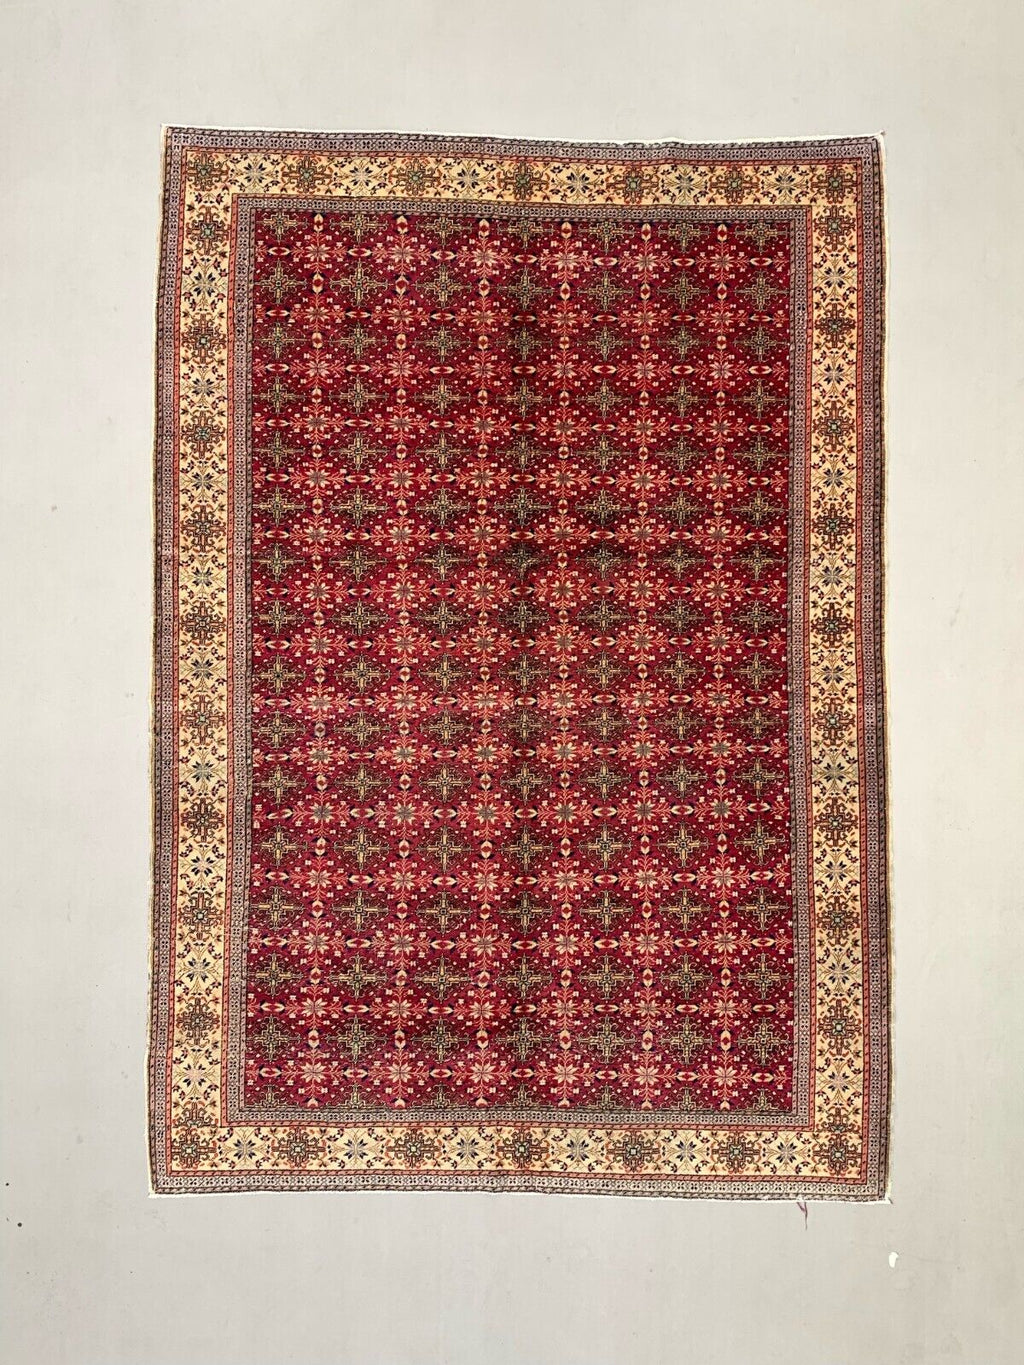 Vintage Turkish Rug 279x193 cm, Tribal Wool Carpet Large